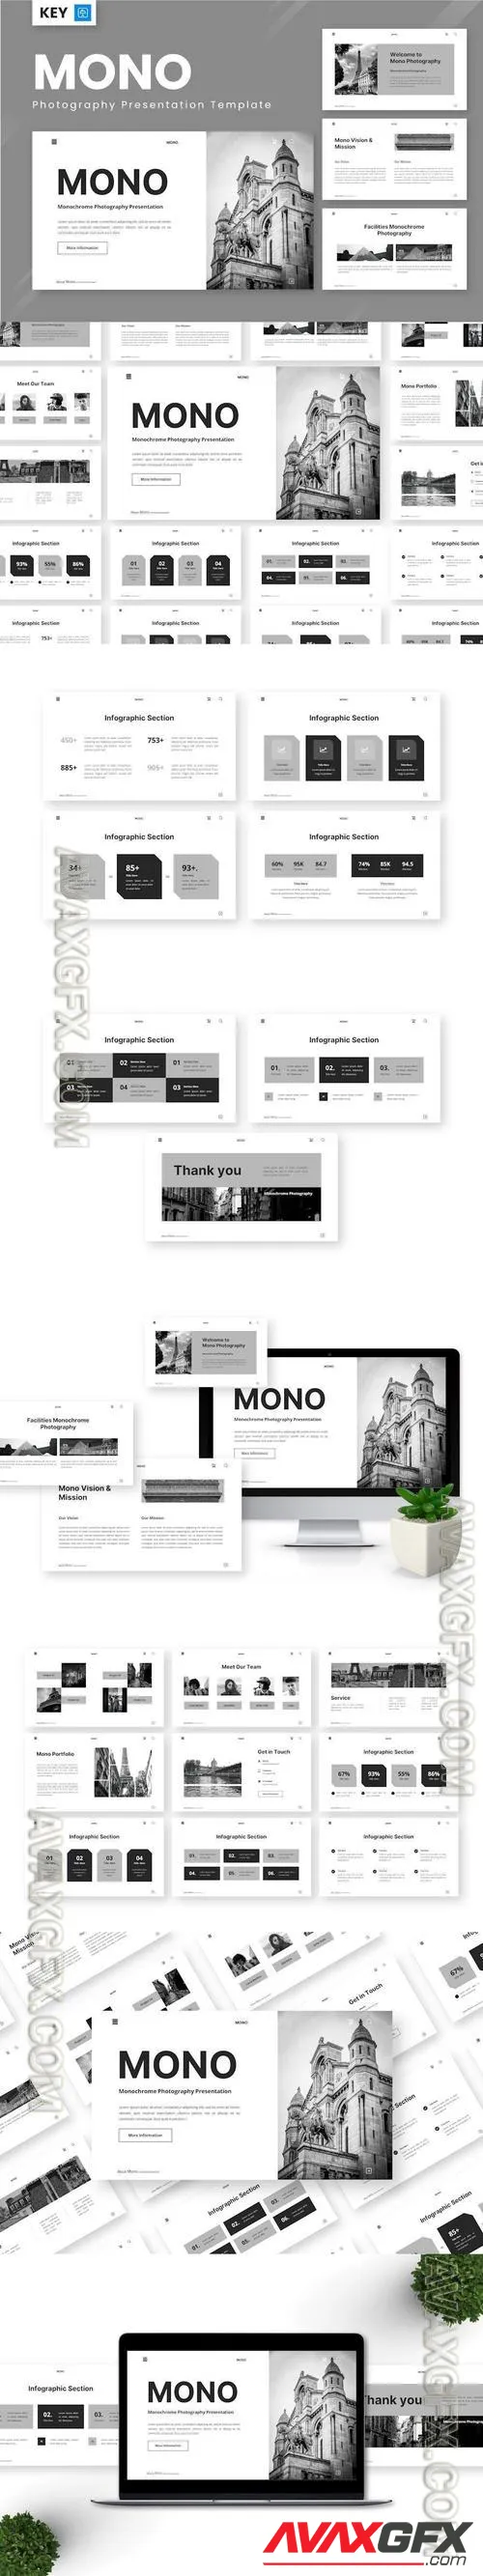 Mono - Photography Keynote Templates